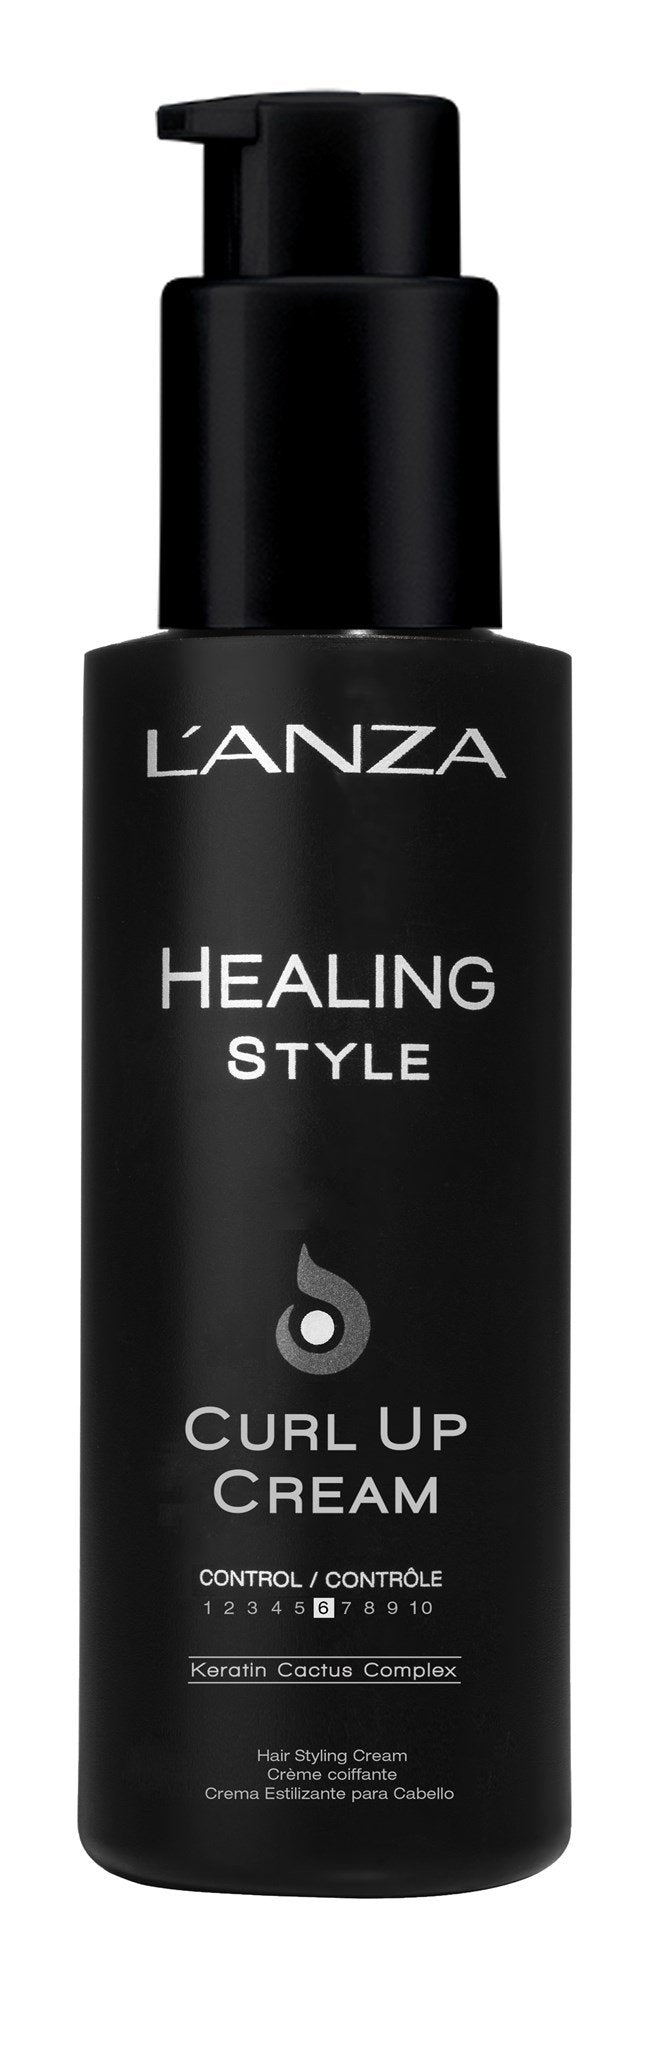 100ml Lanza Healing Style Curl Up Cream